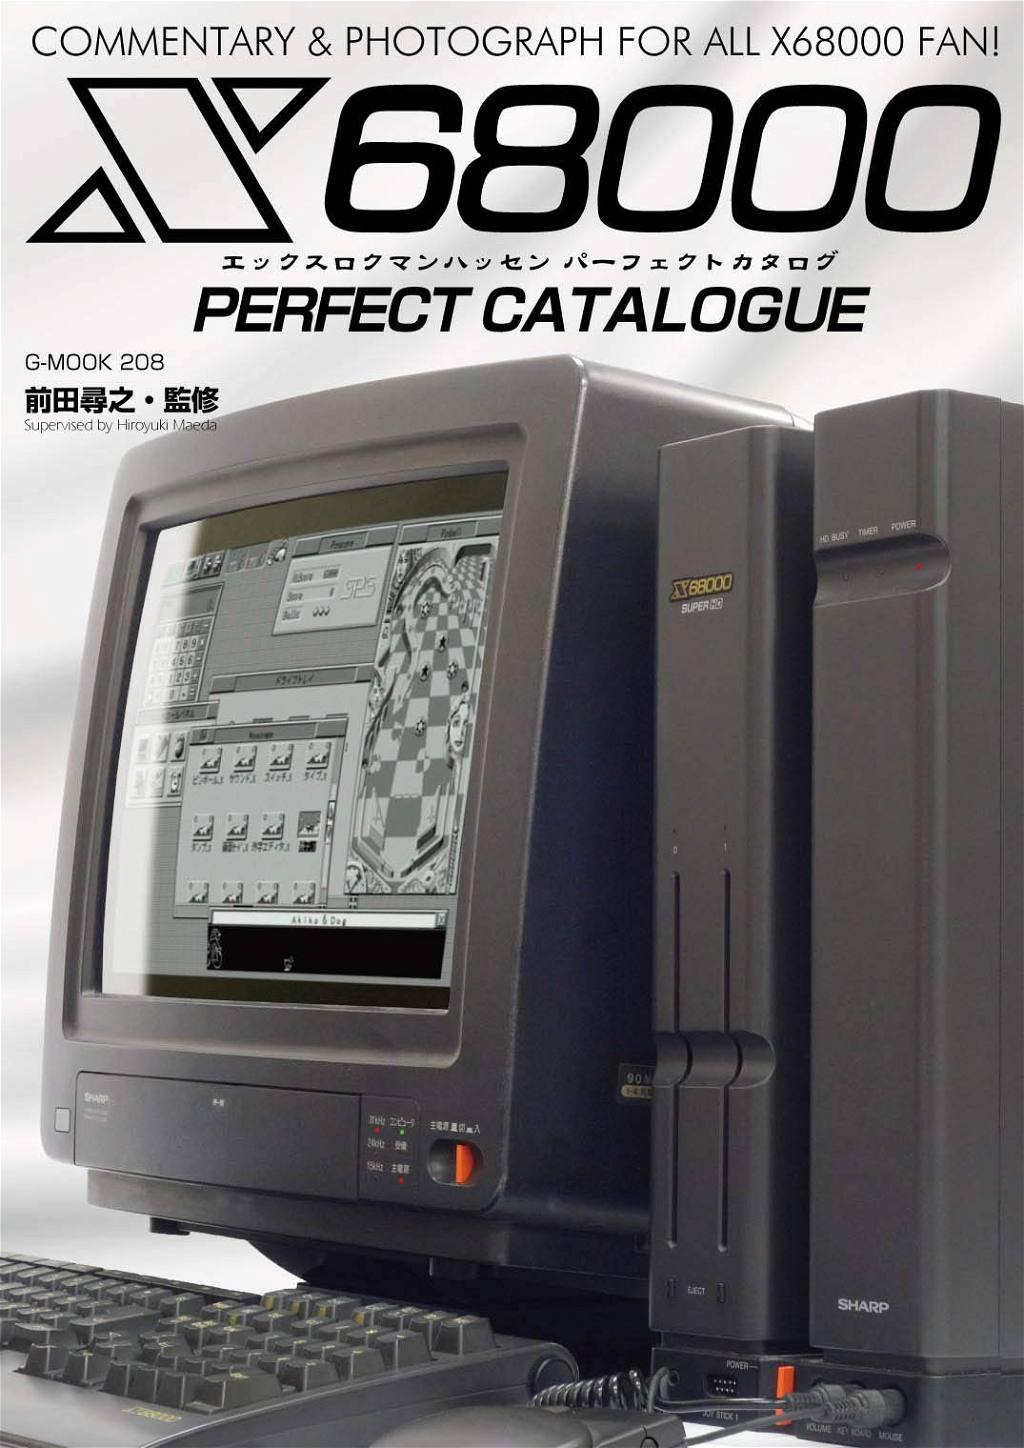 x68000-perfect-catalogue-645013.1.jpg